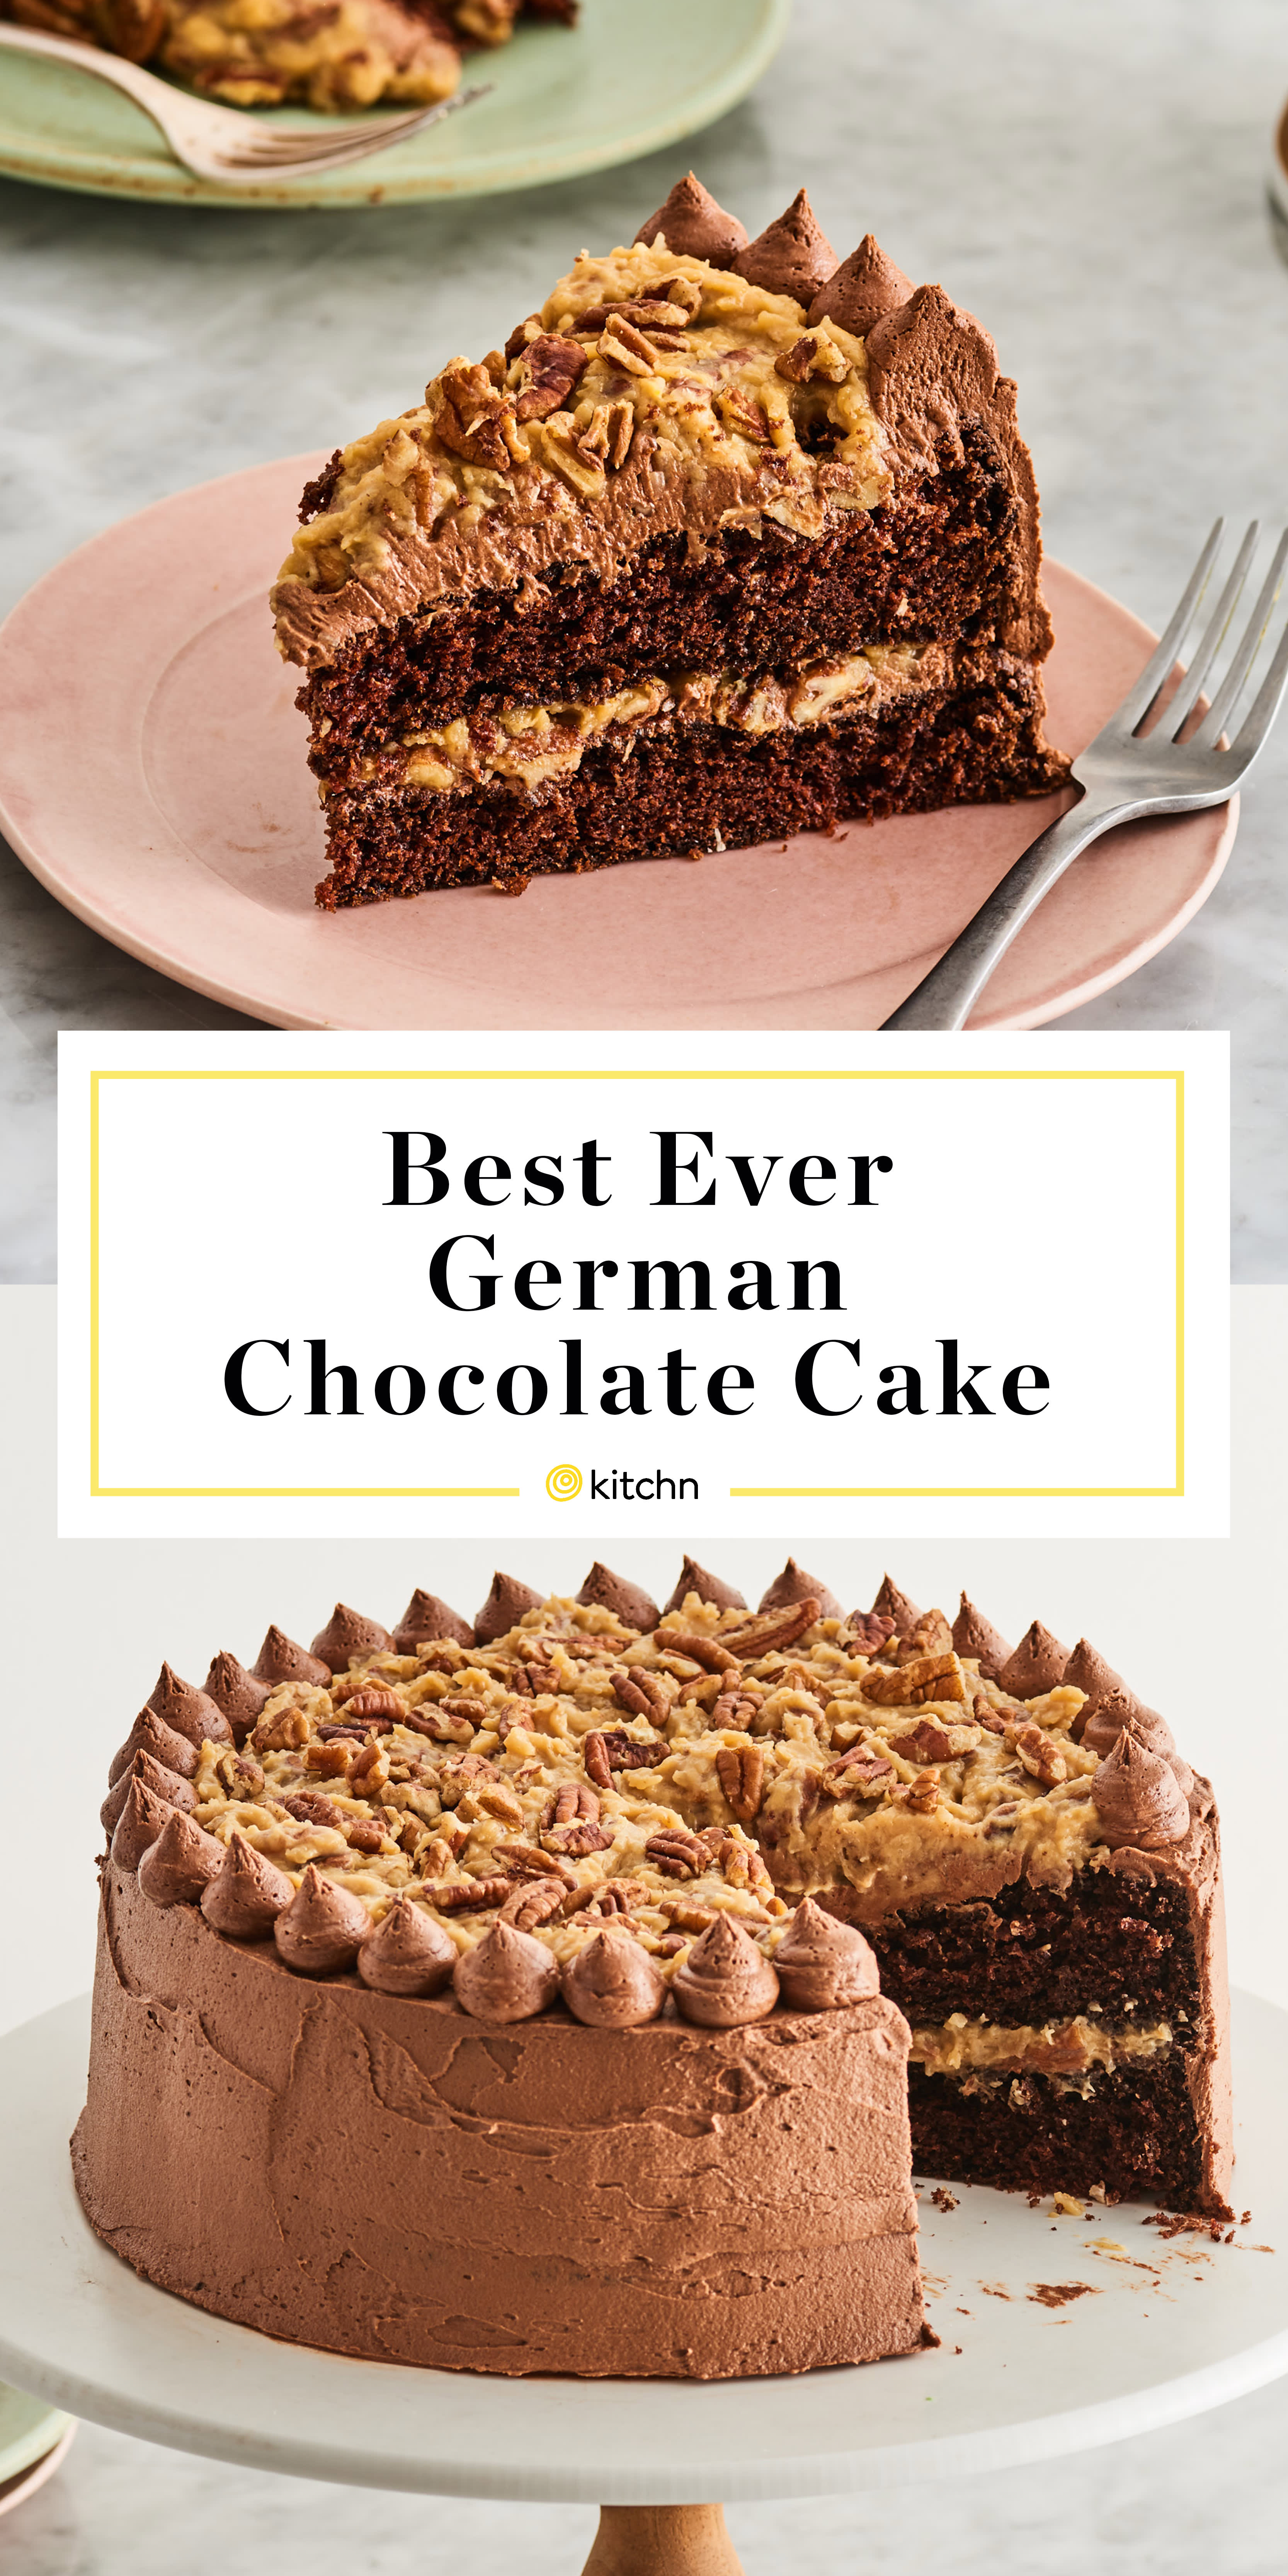 How To Make German Chocolate Cake Kitchn